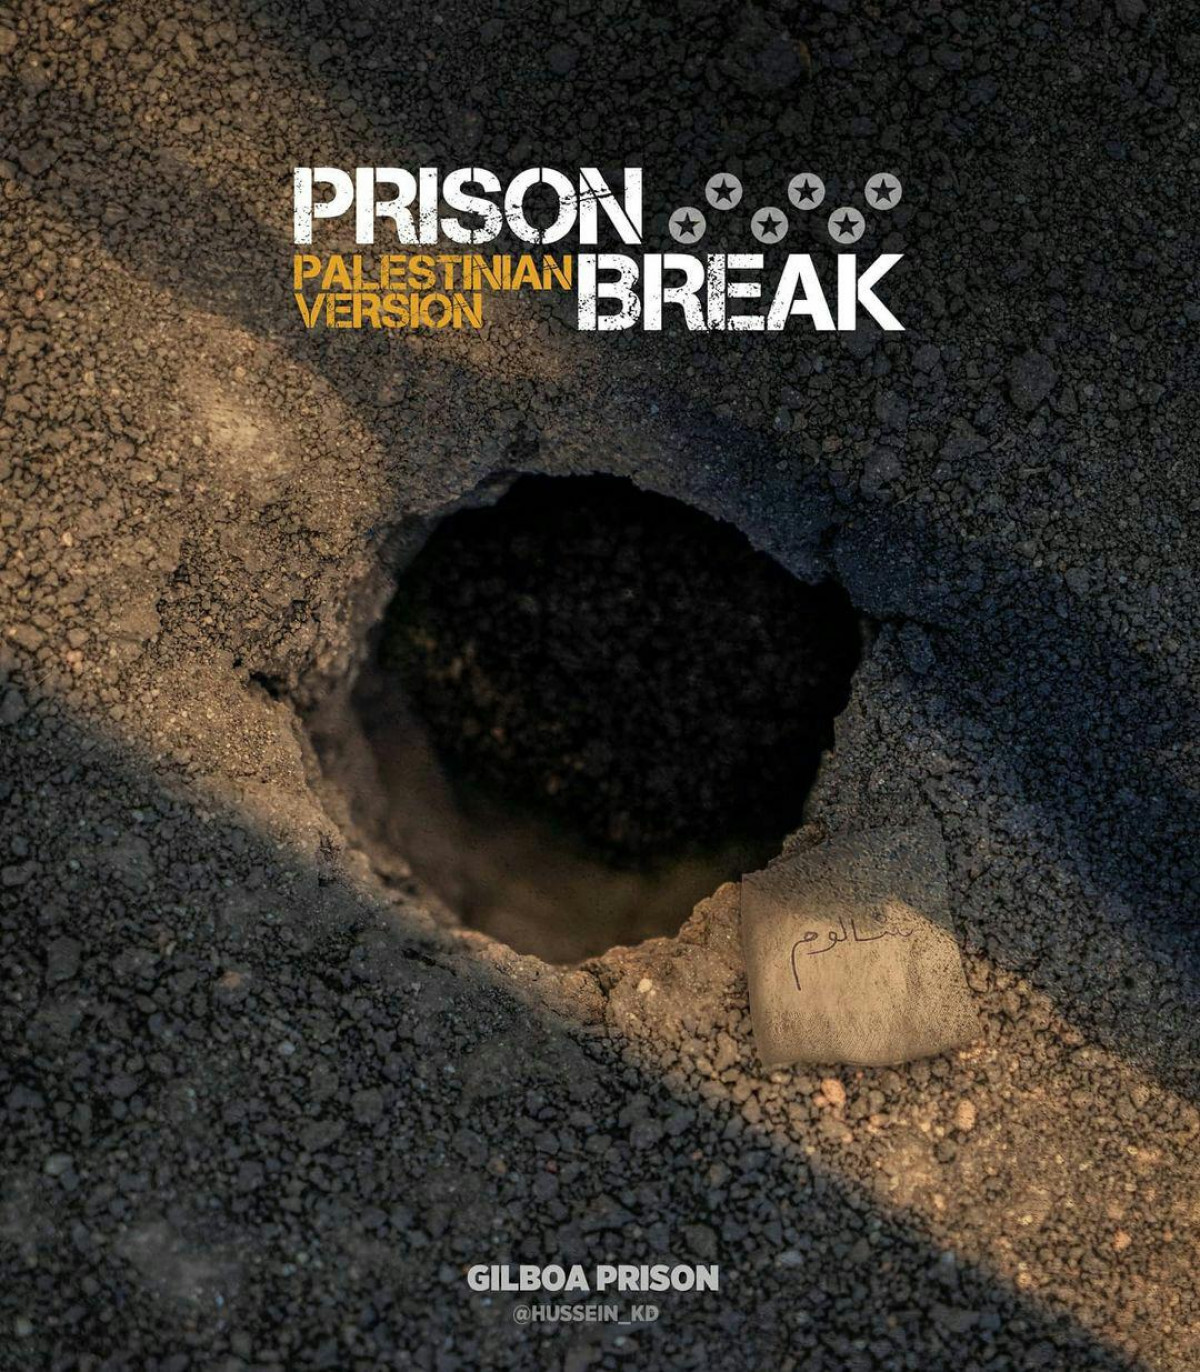 Prison palestinian version break